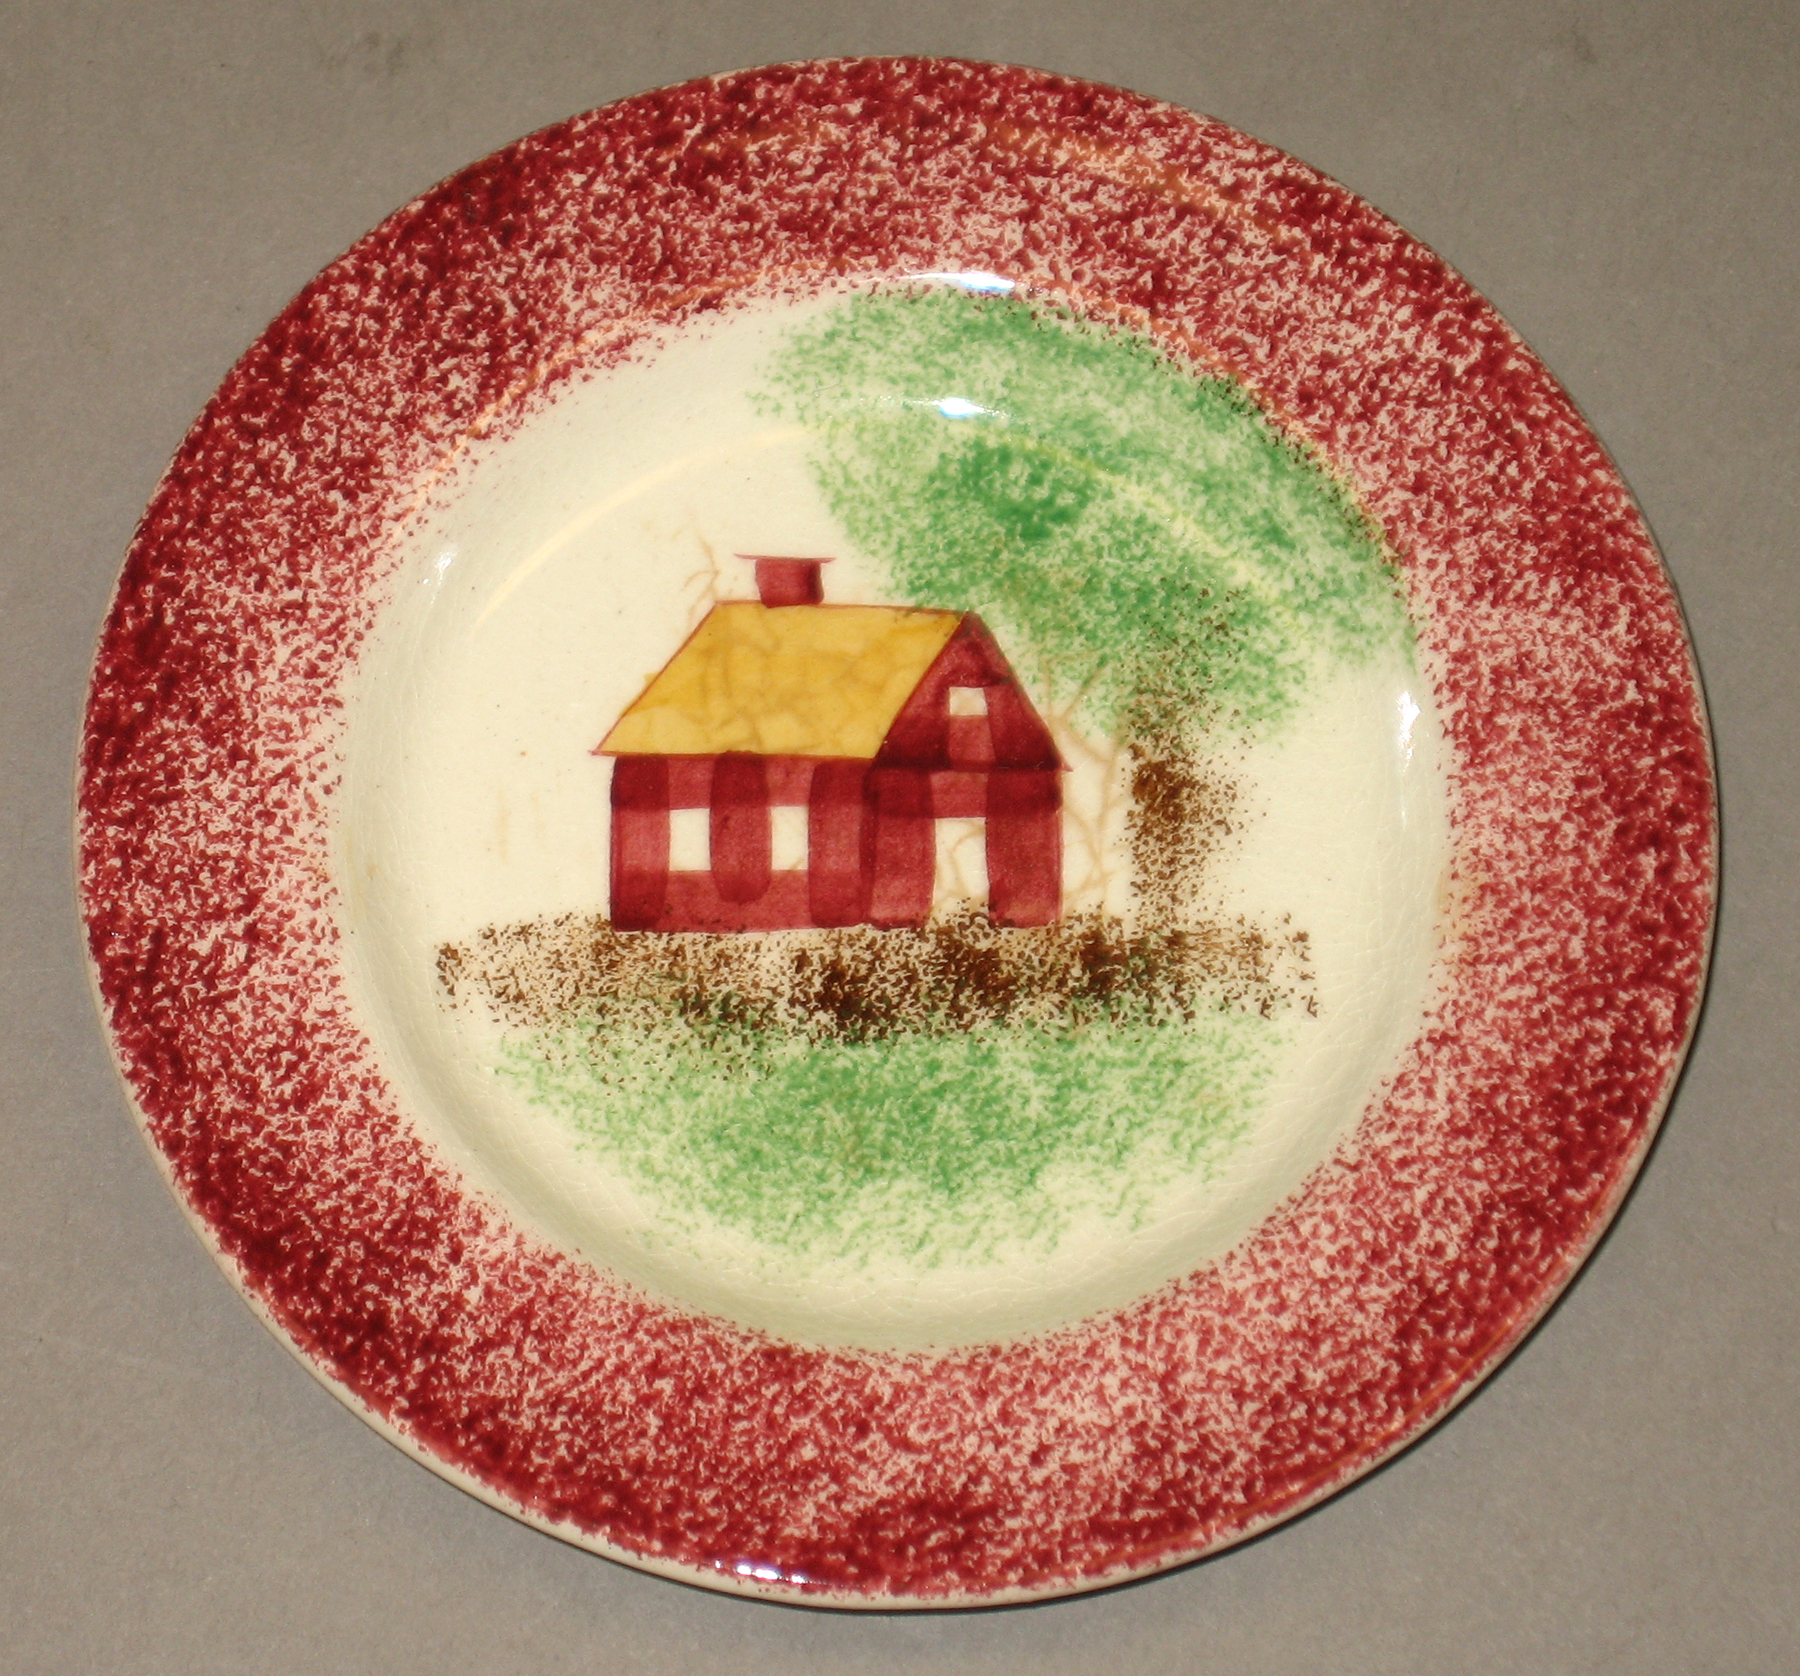 1954.0003.012 Spatterware plate